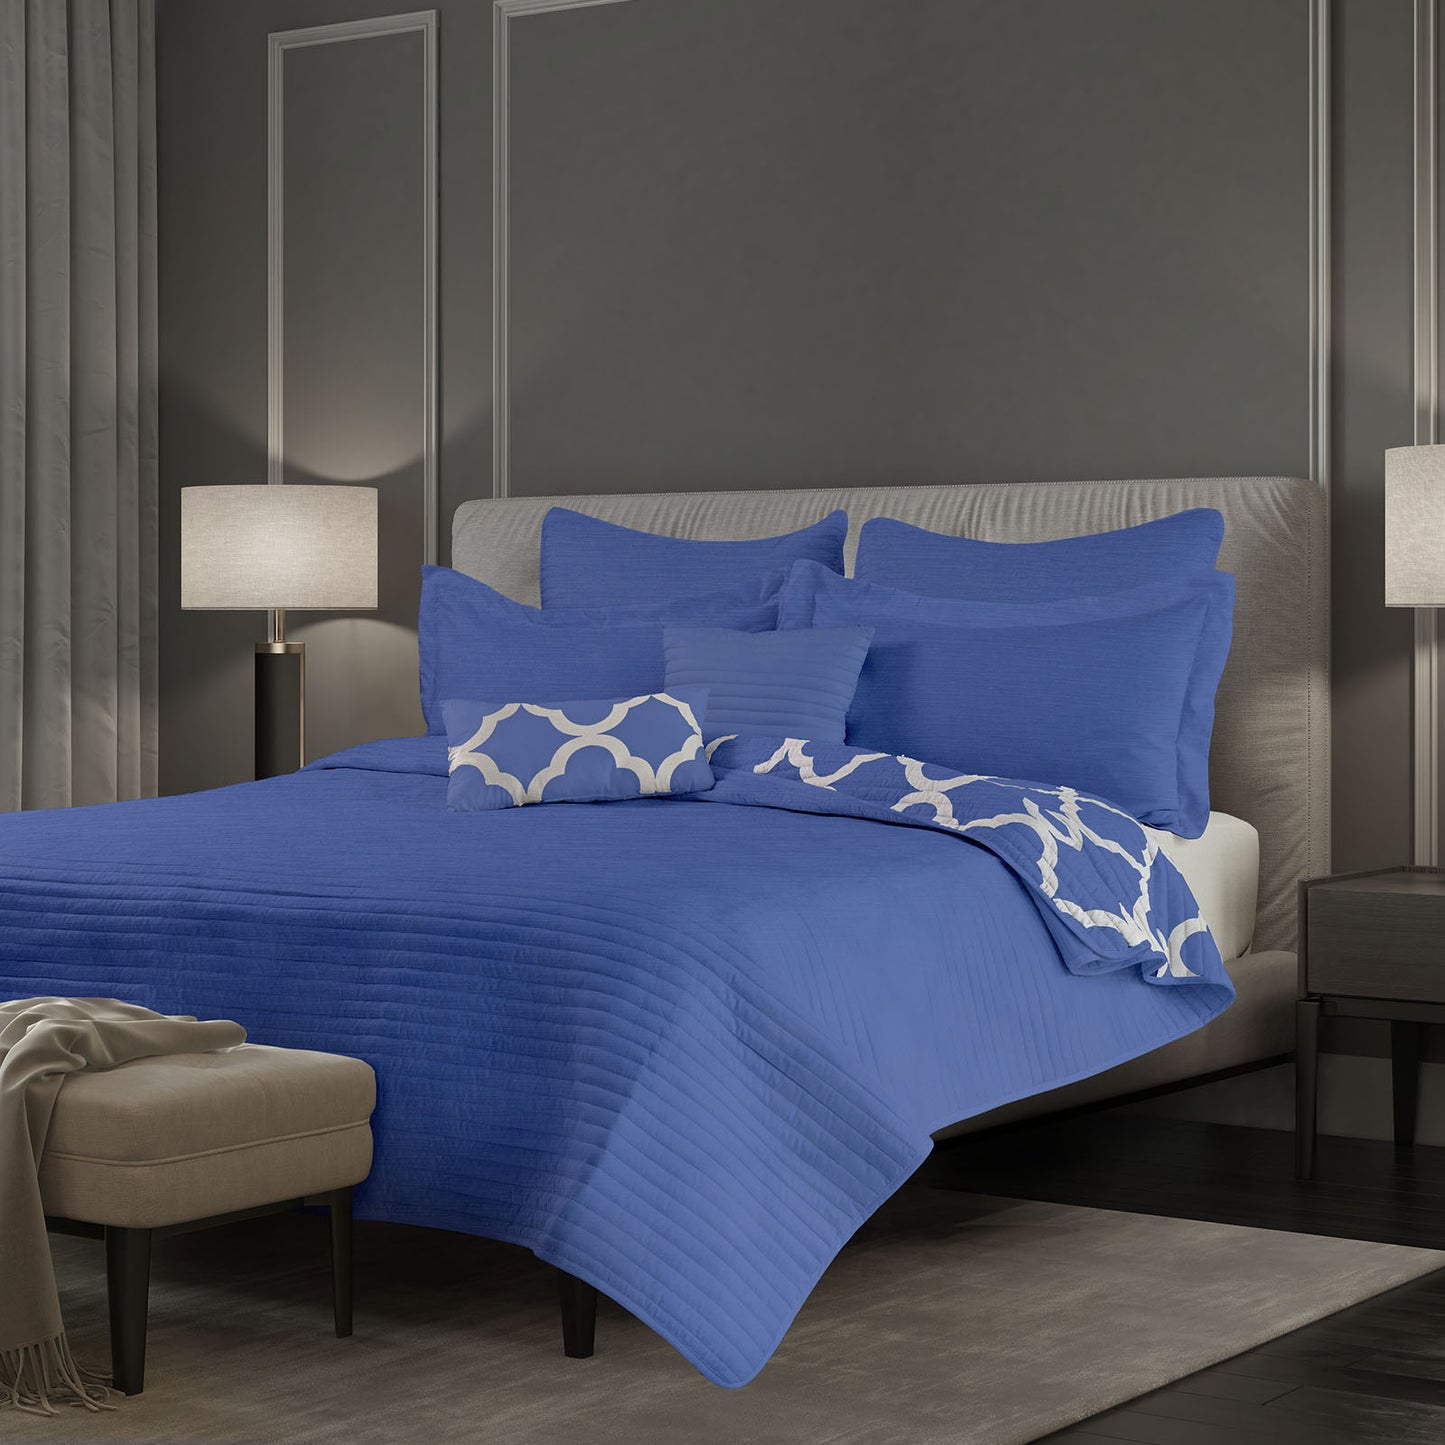 Royal Comfort Bamboo Cooling Reversible 7 Piece Comforter Set Bedspread - Queen - Royal Blue - BM House & Garden